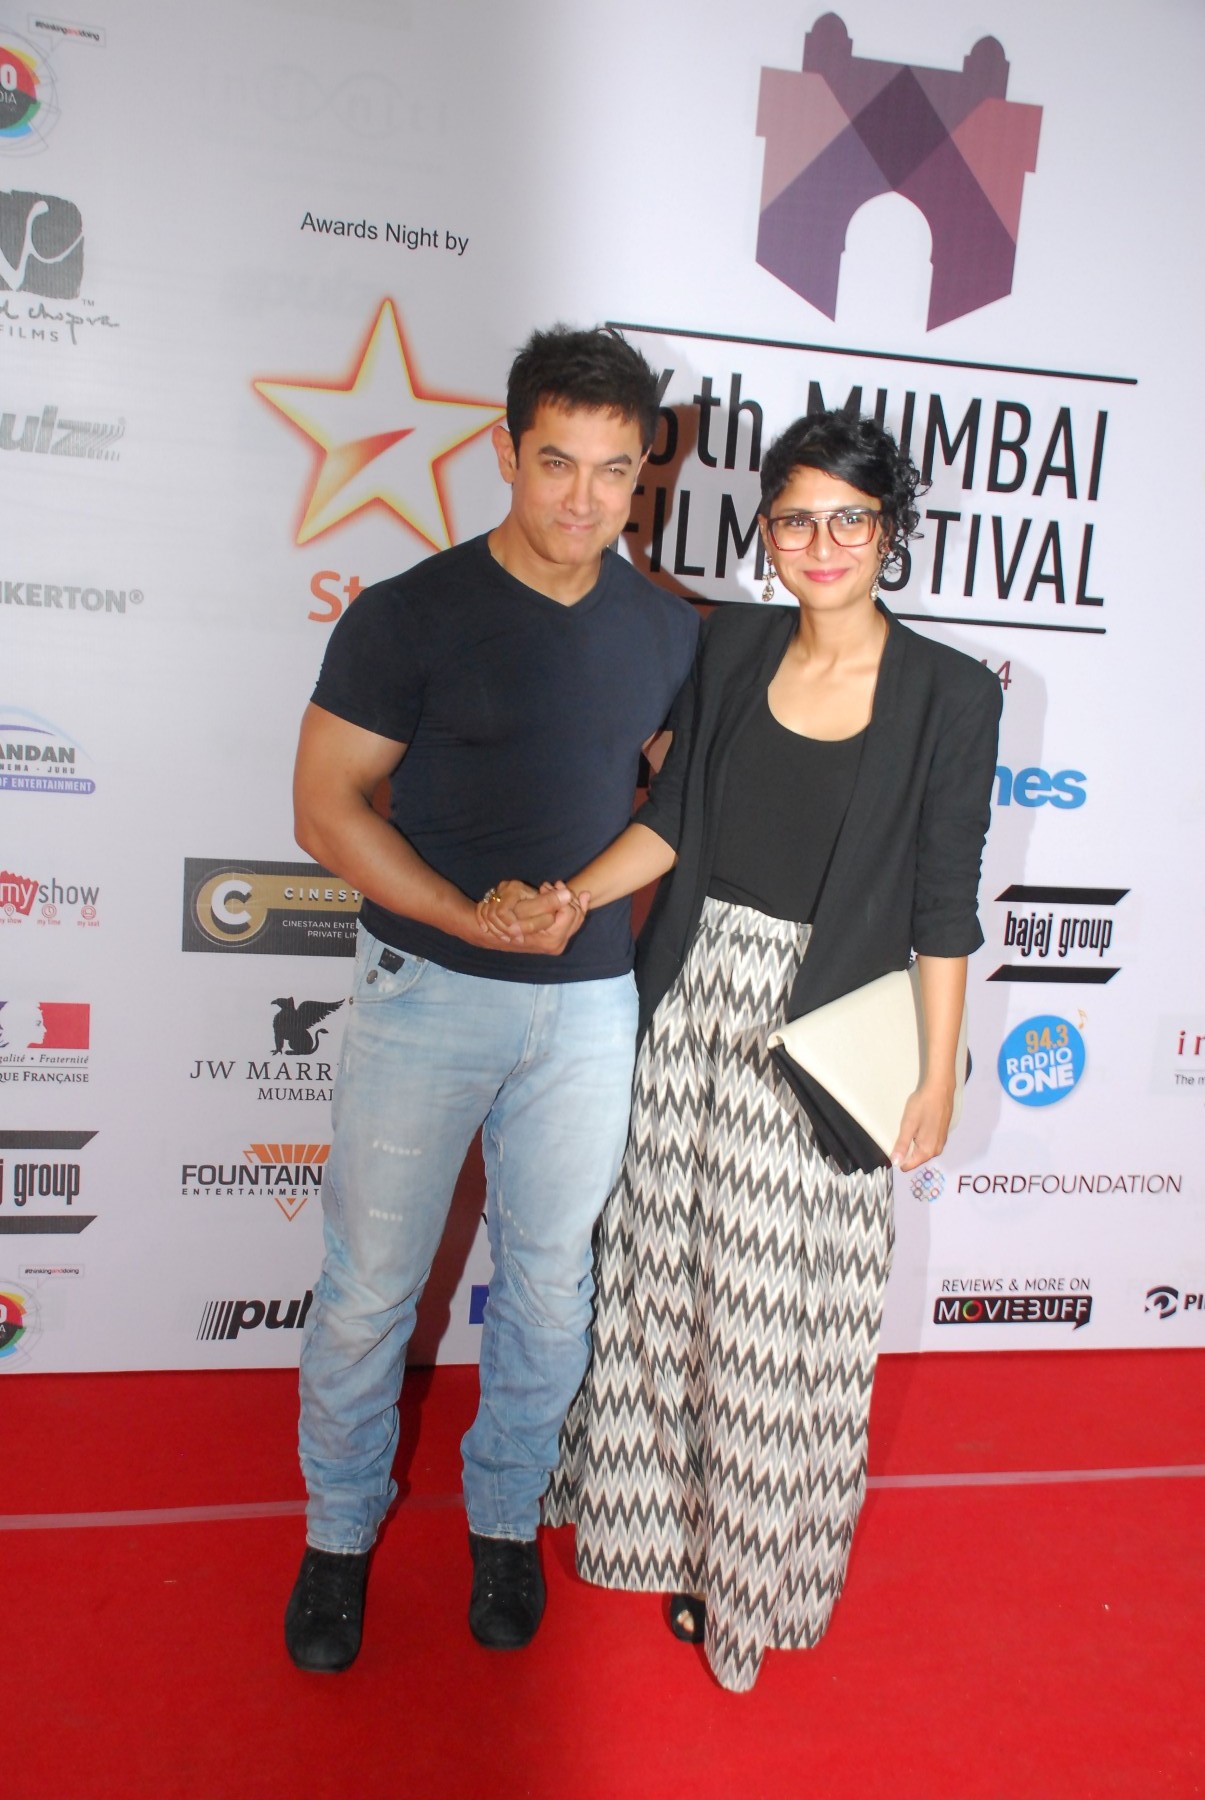 Celebs at 16th Mumbai Film Festival Closing Ceremony